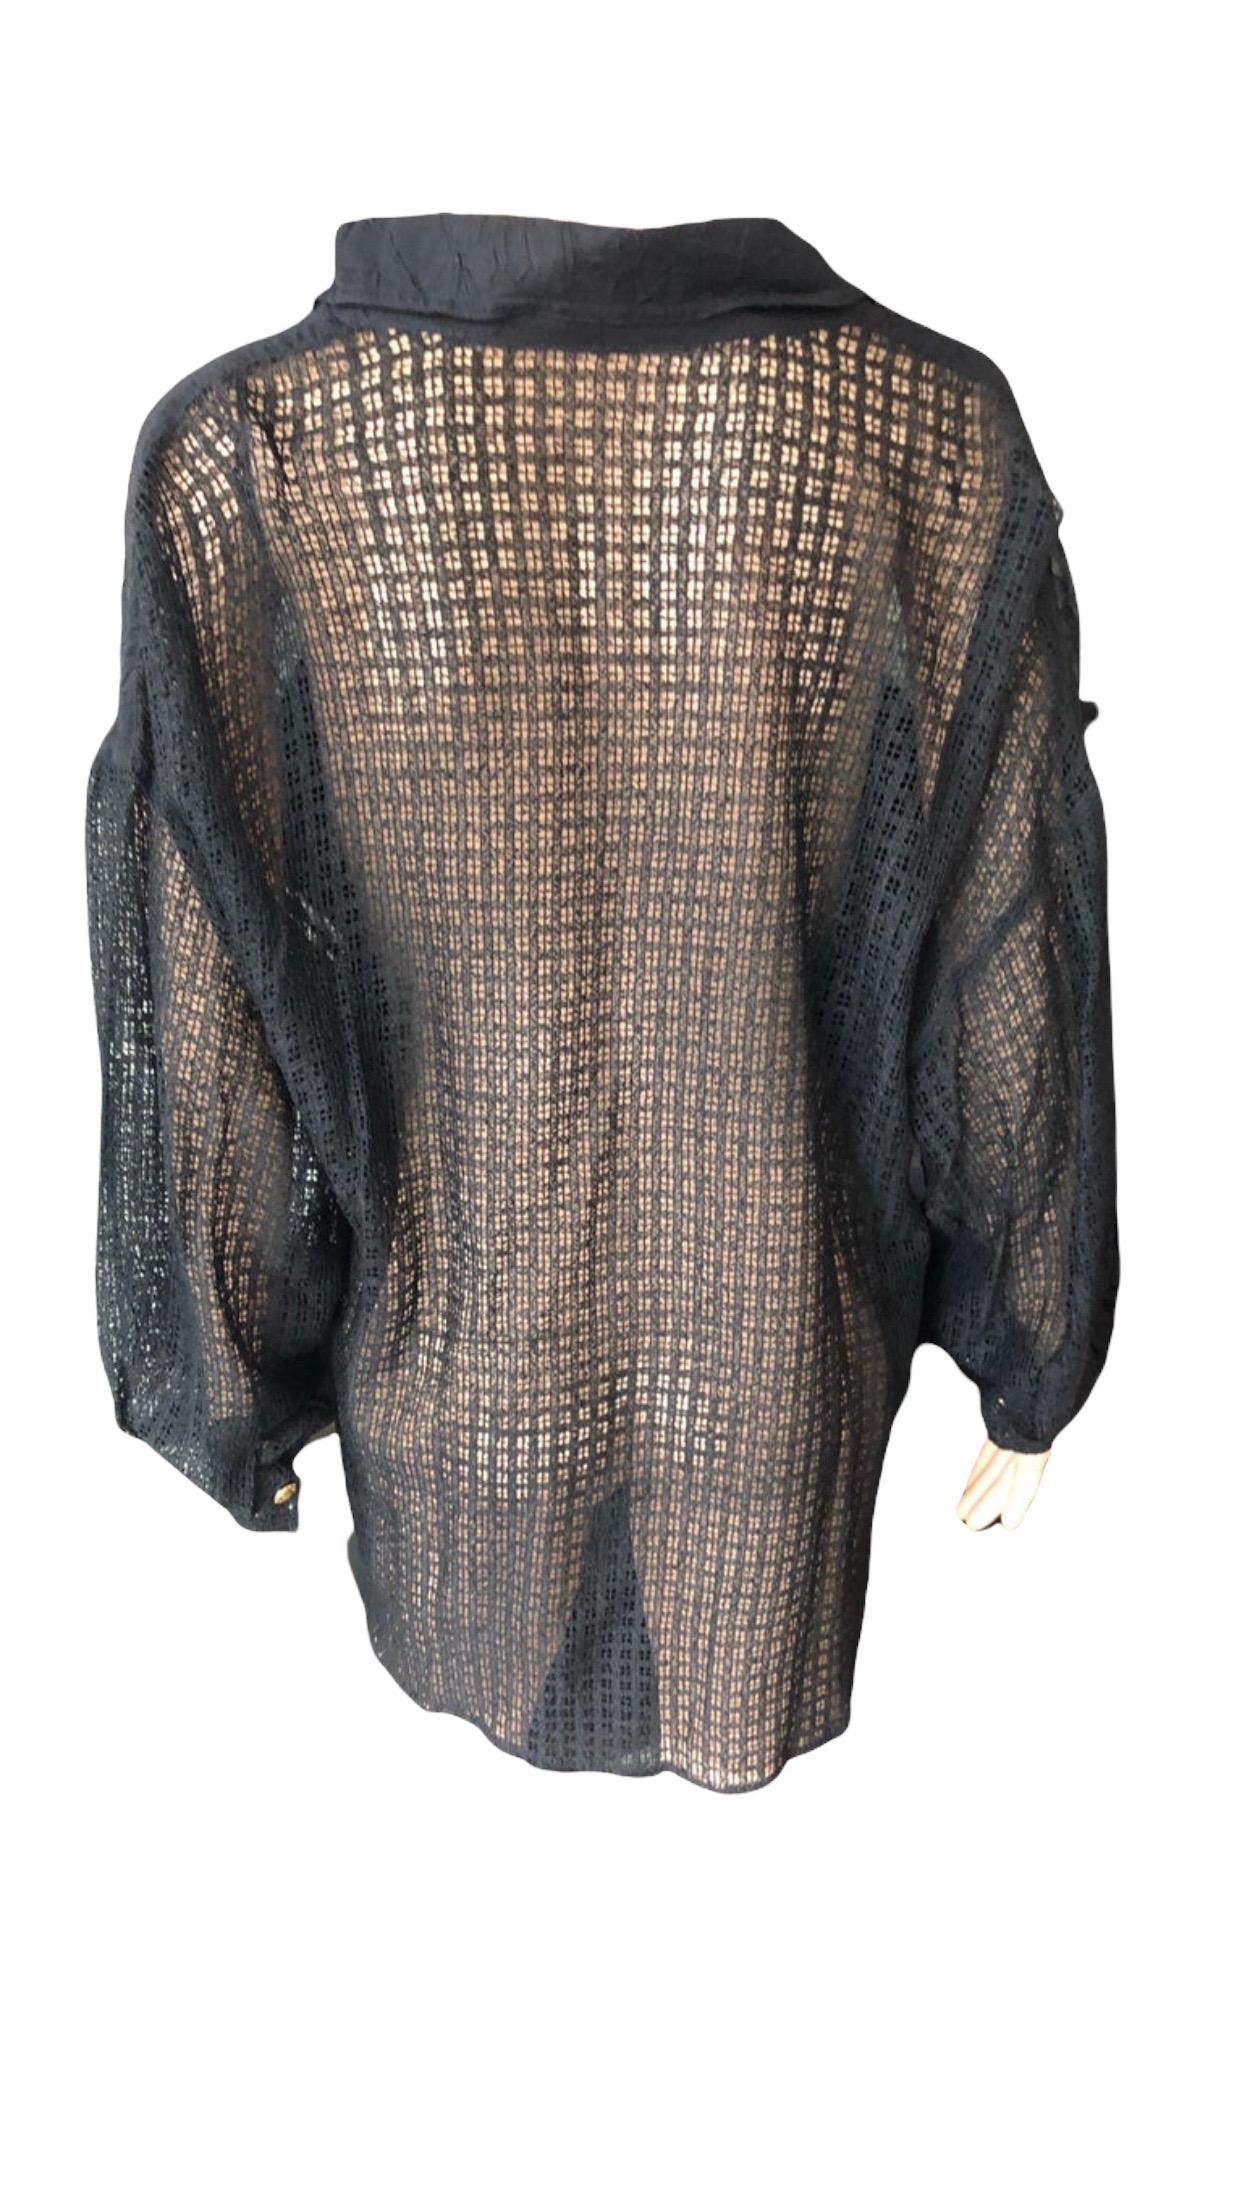 Gianni Versace c. 1990 Vintage Sheer Silk Mesh Black Shirt Blouse Top For Sale 10